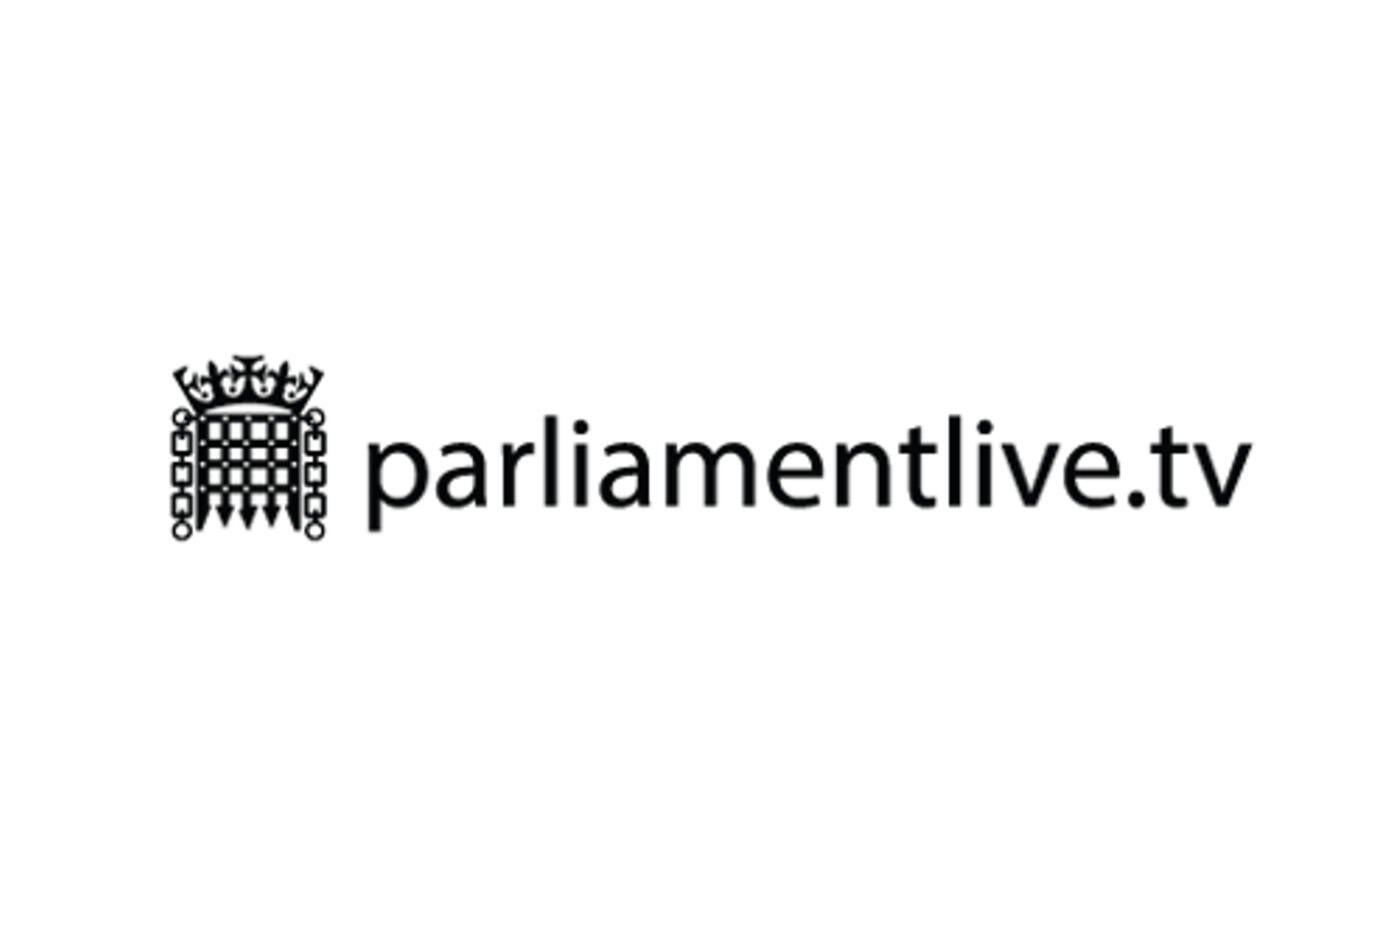 parliamentlive.tv